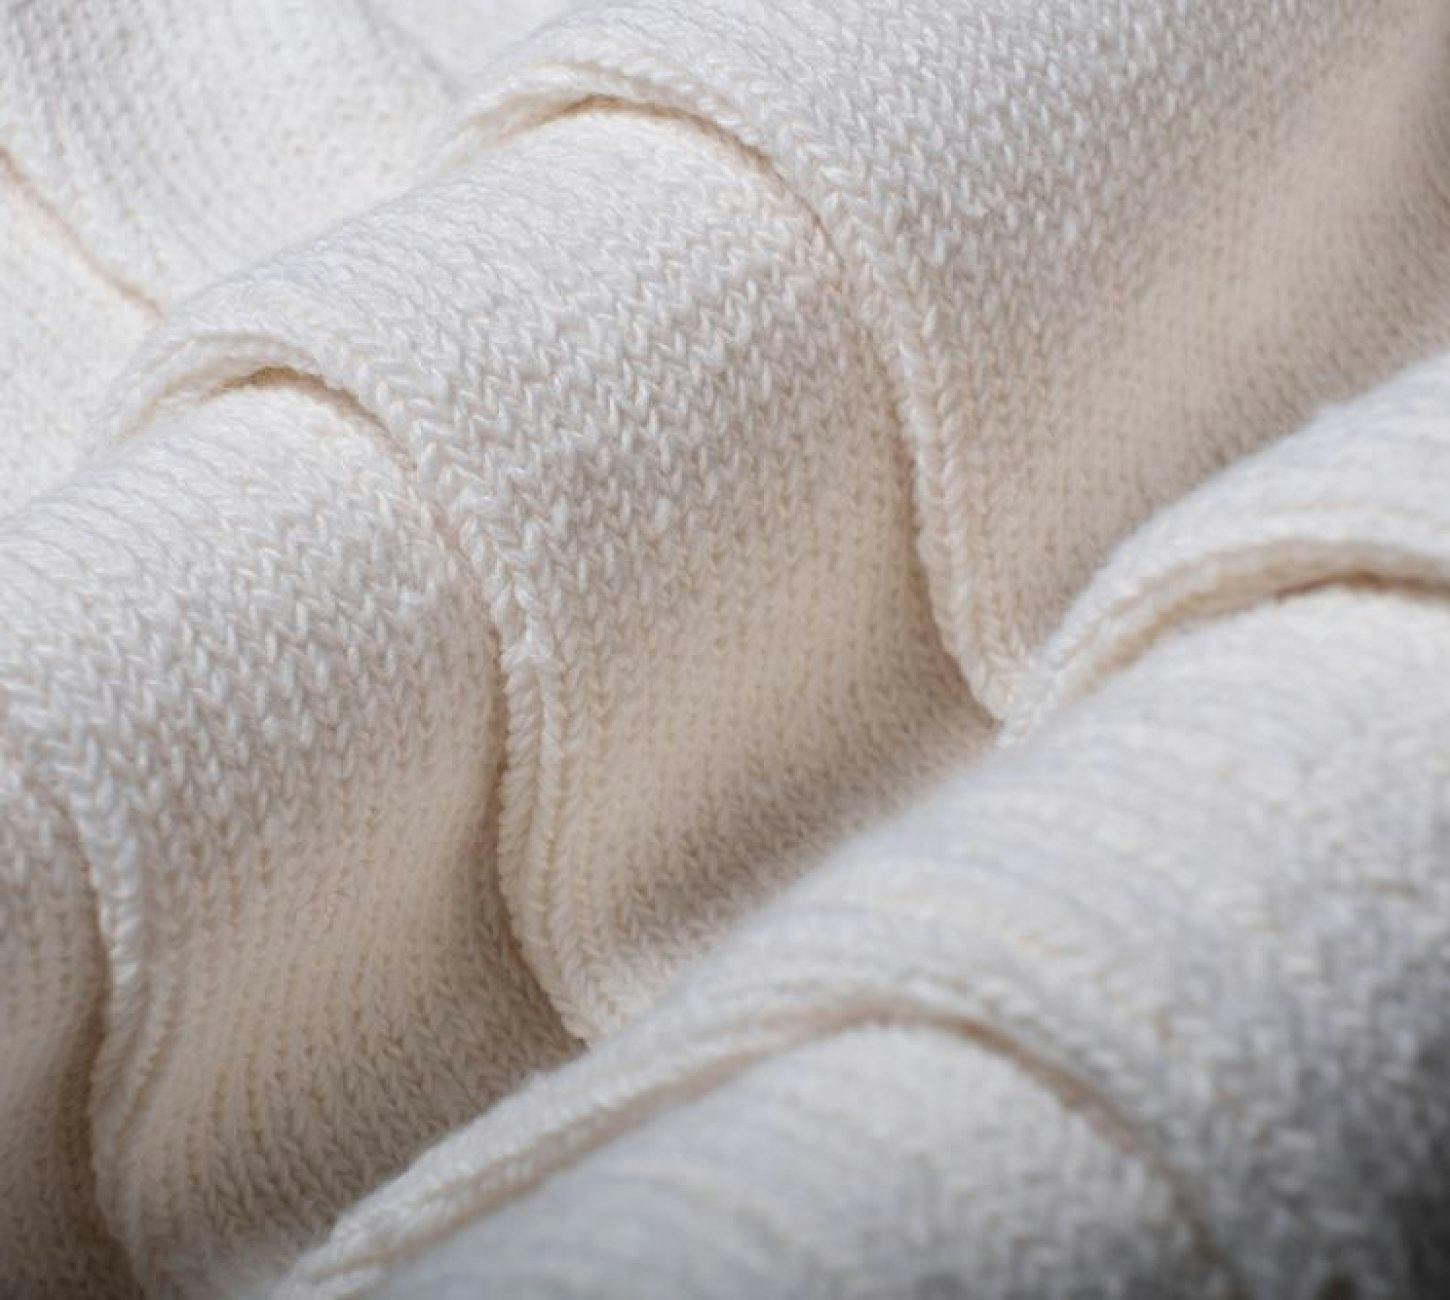 Lounge & Leisure Socks (Natural White) - Close Up